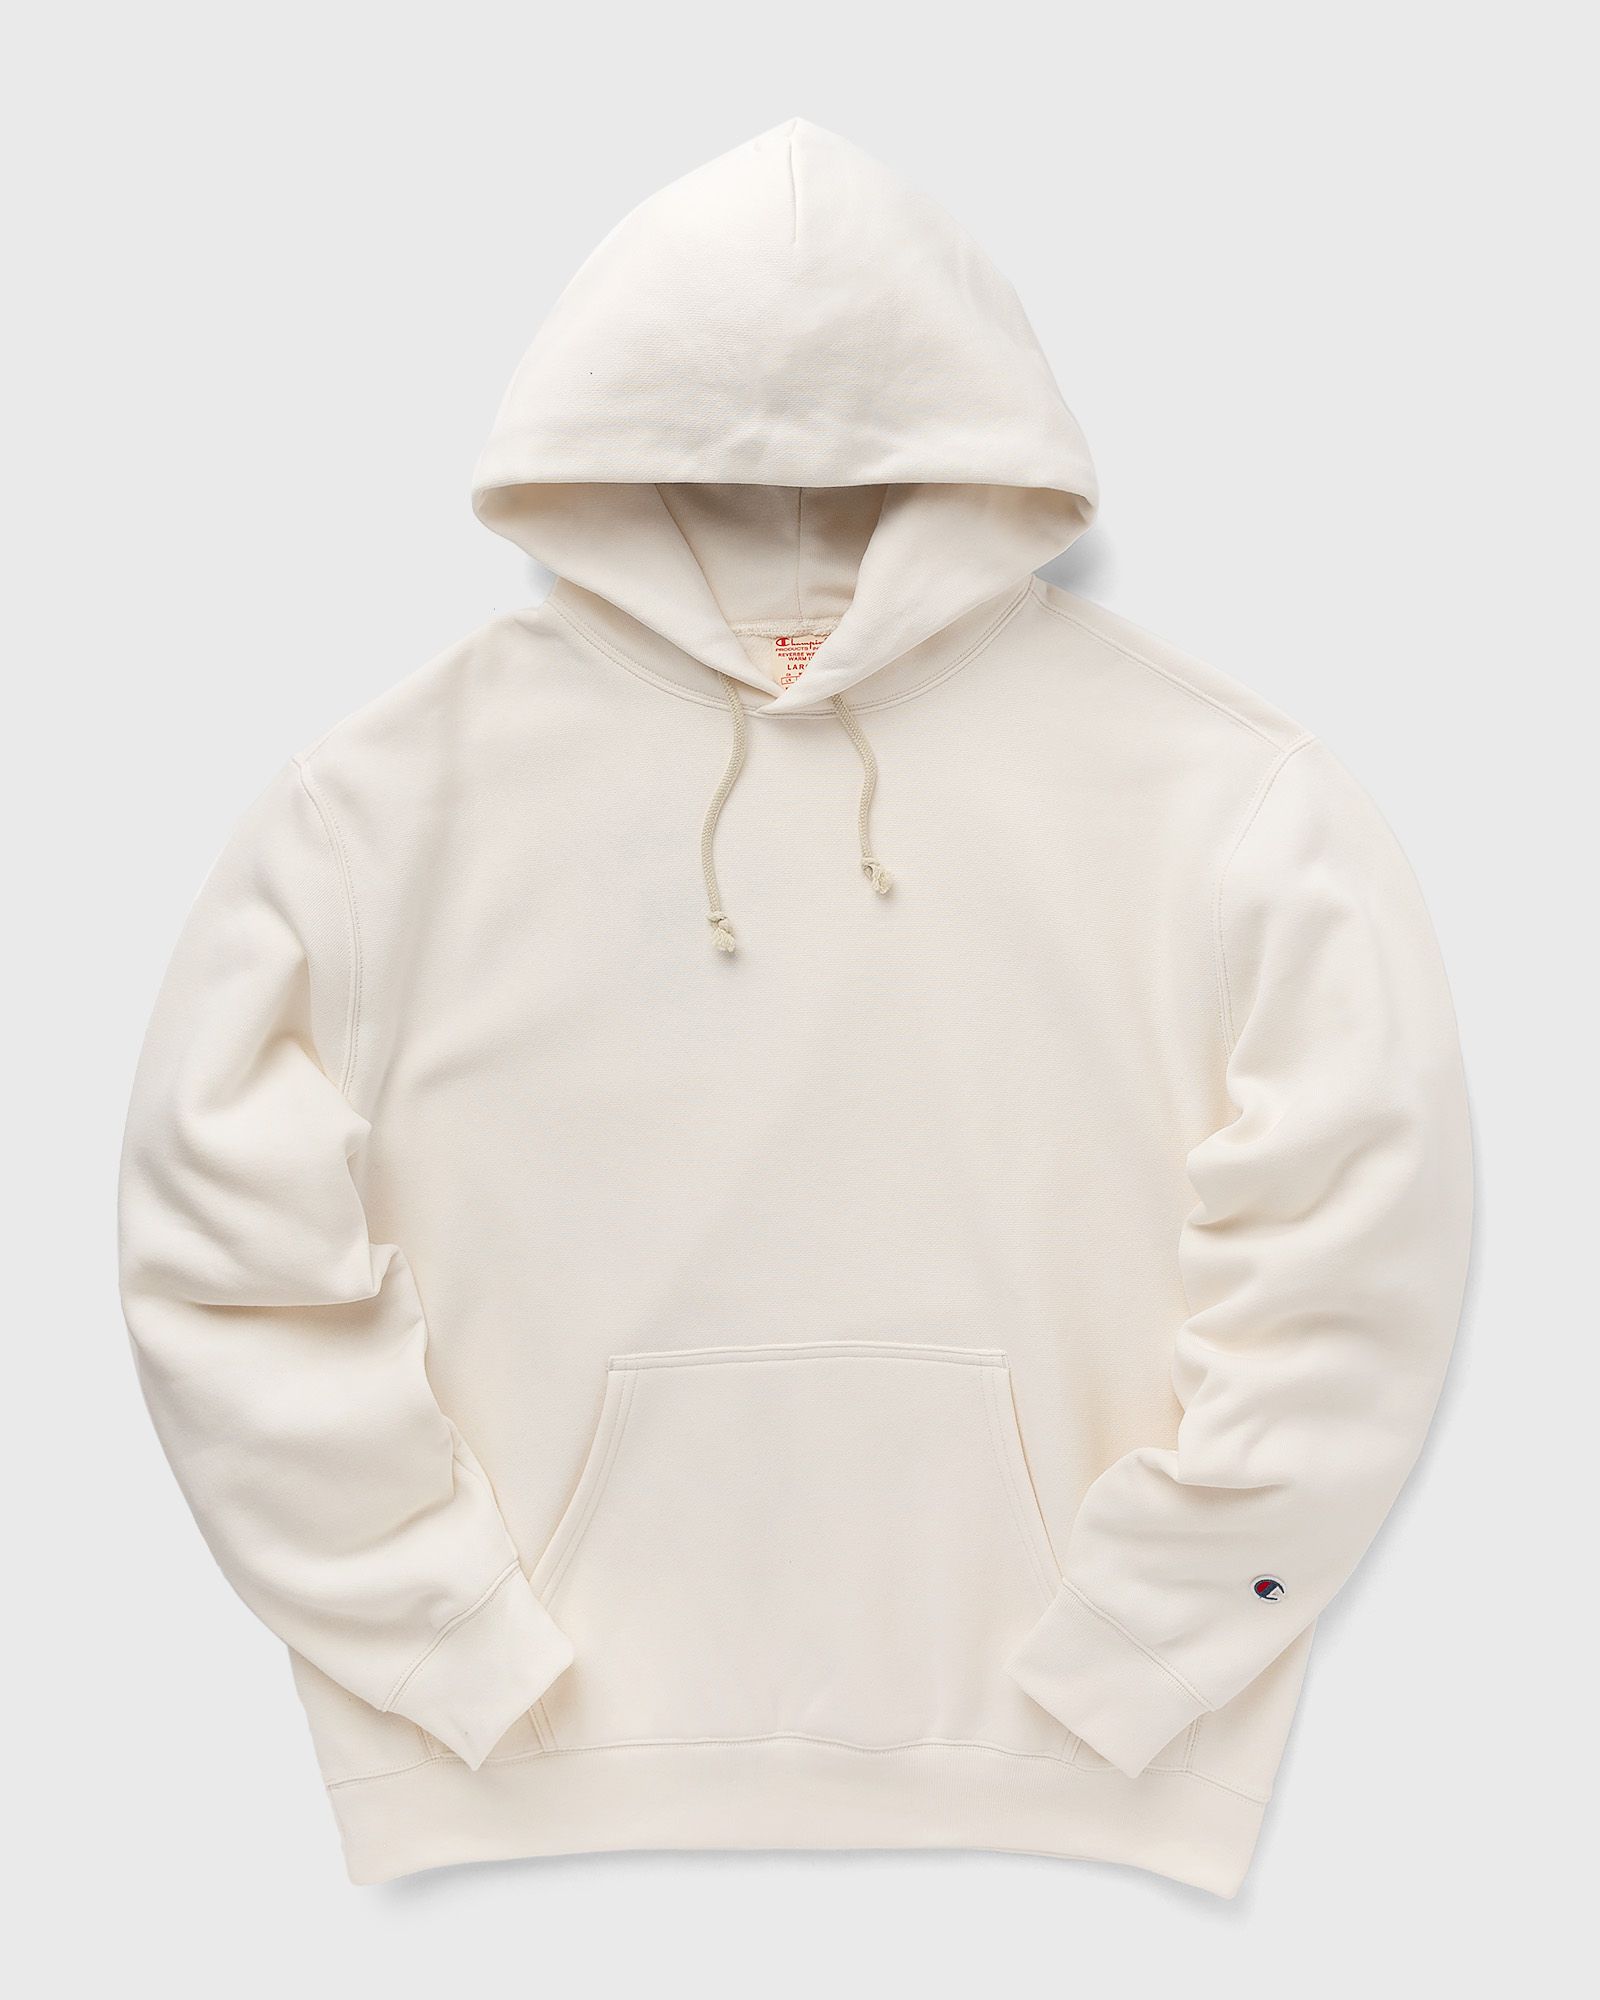 CHAMPION - hooded sweatshirt men hoodies white in größe:l